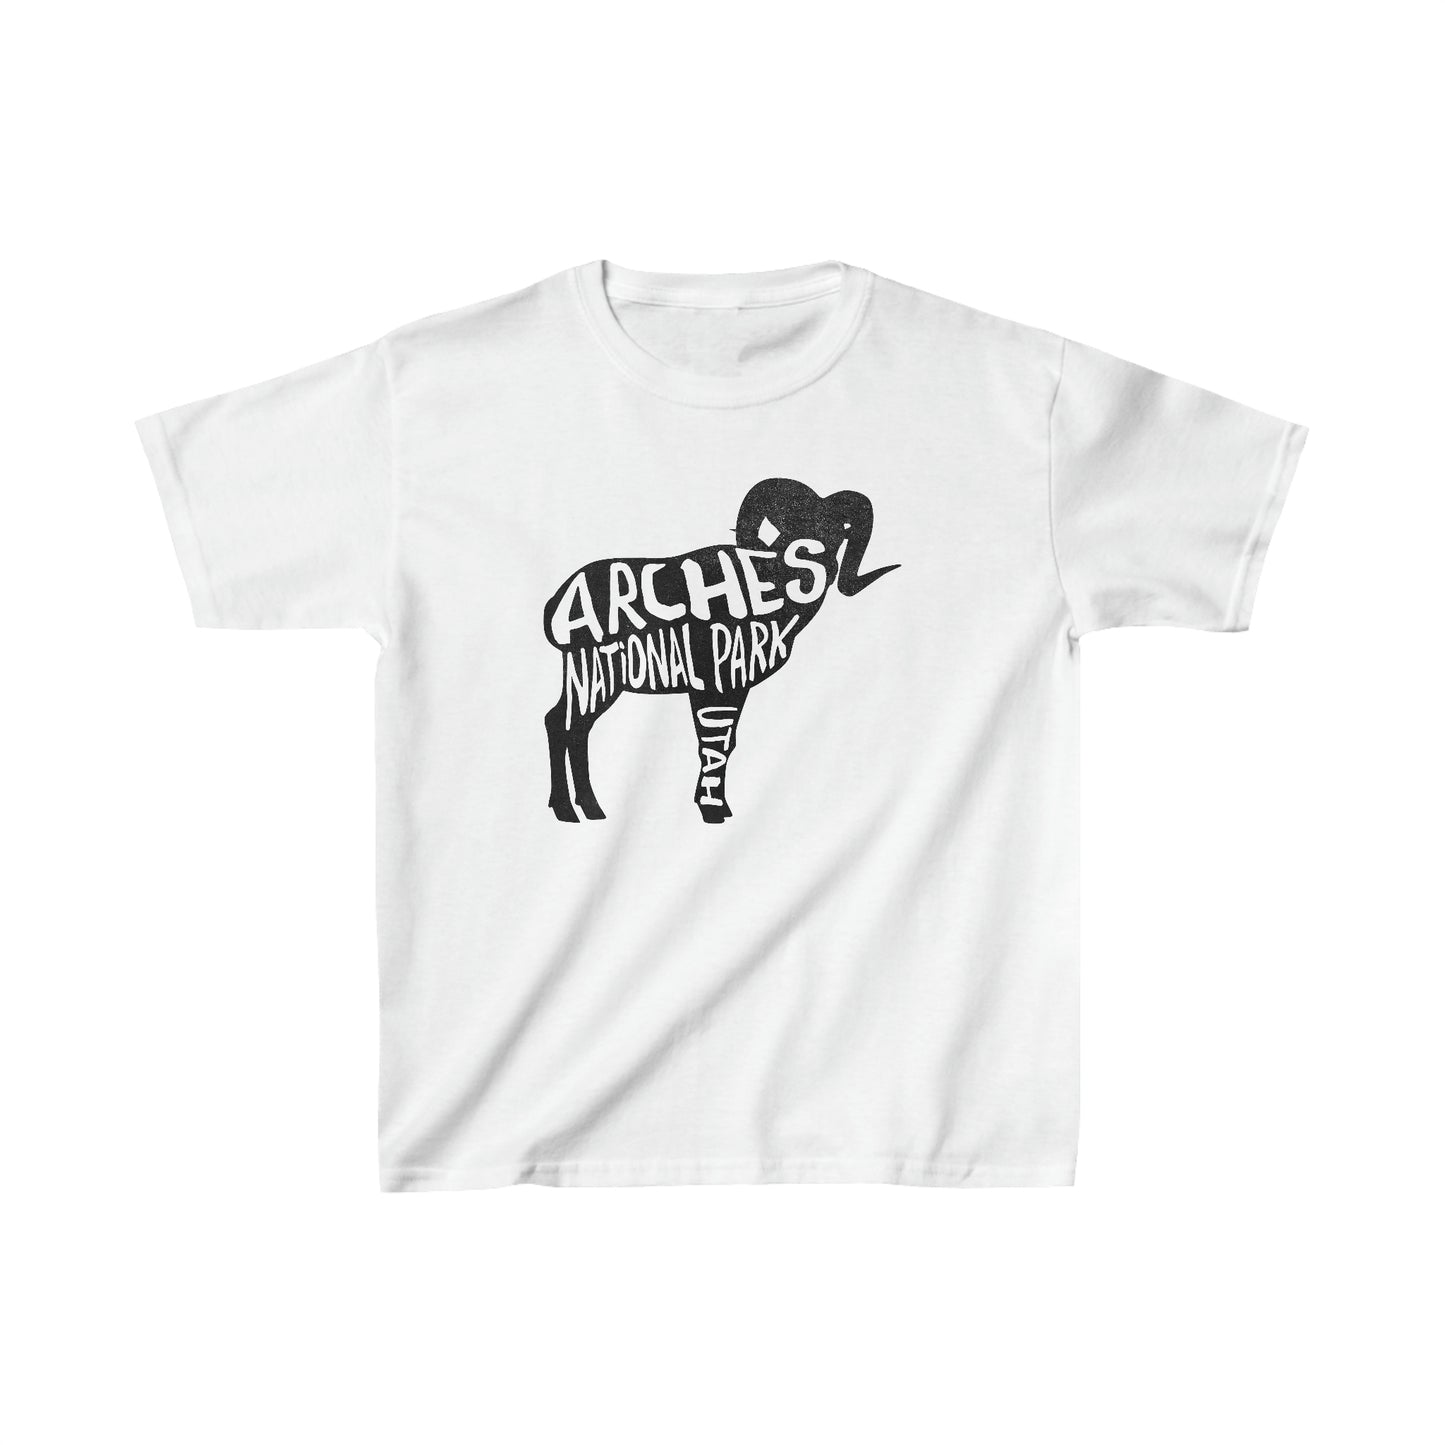 Arches National Park Child T-Shirt - Bighorn Sheep